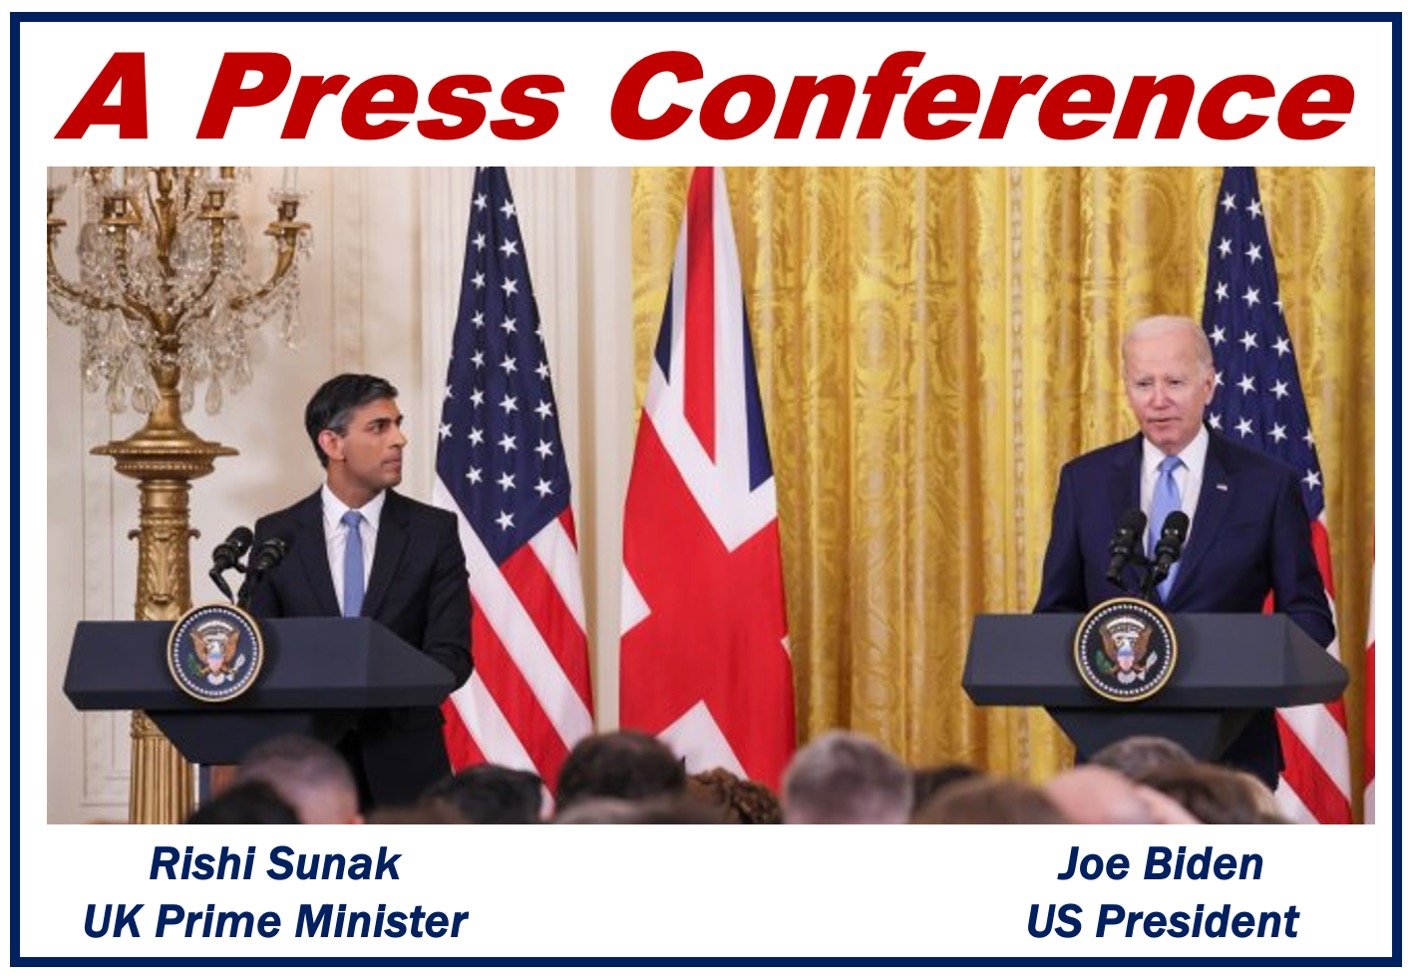 Photo of US President Joe Biden and UK Prime Minister Rishi Sunak at a press conference.